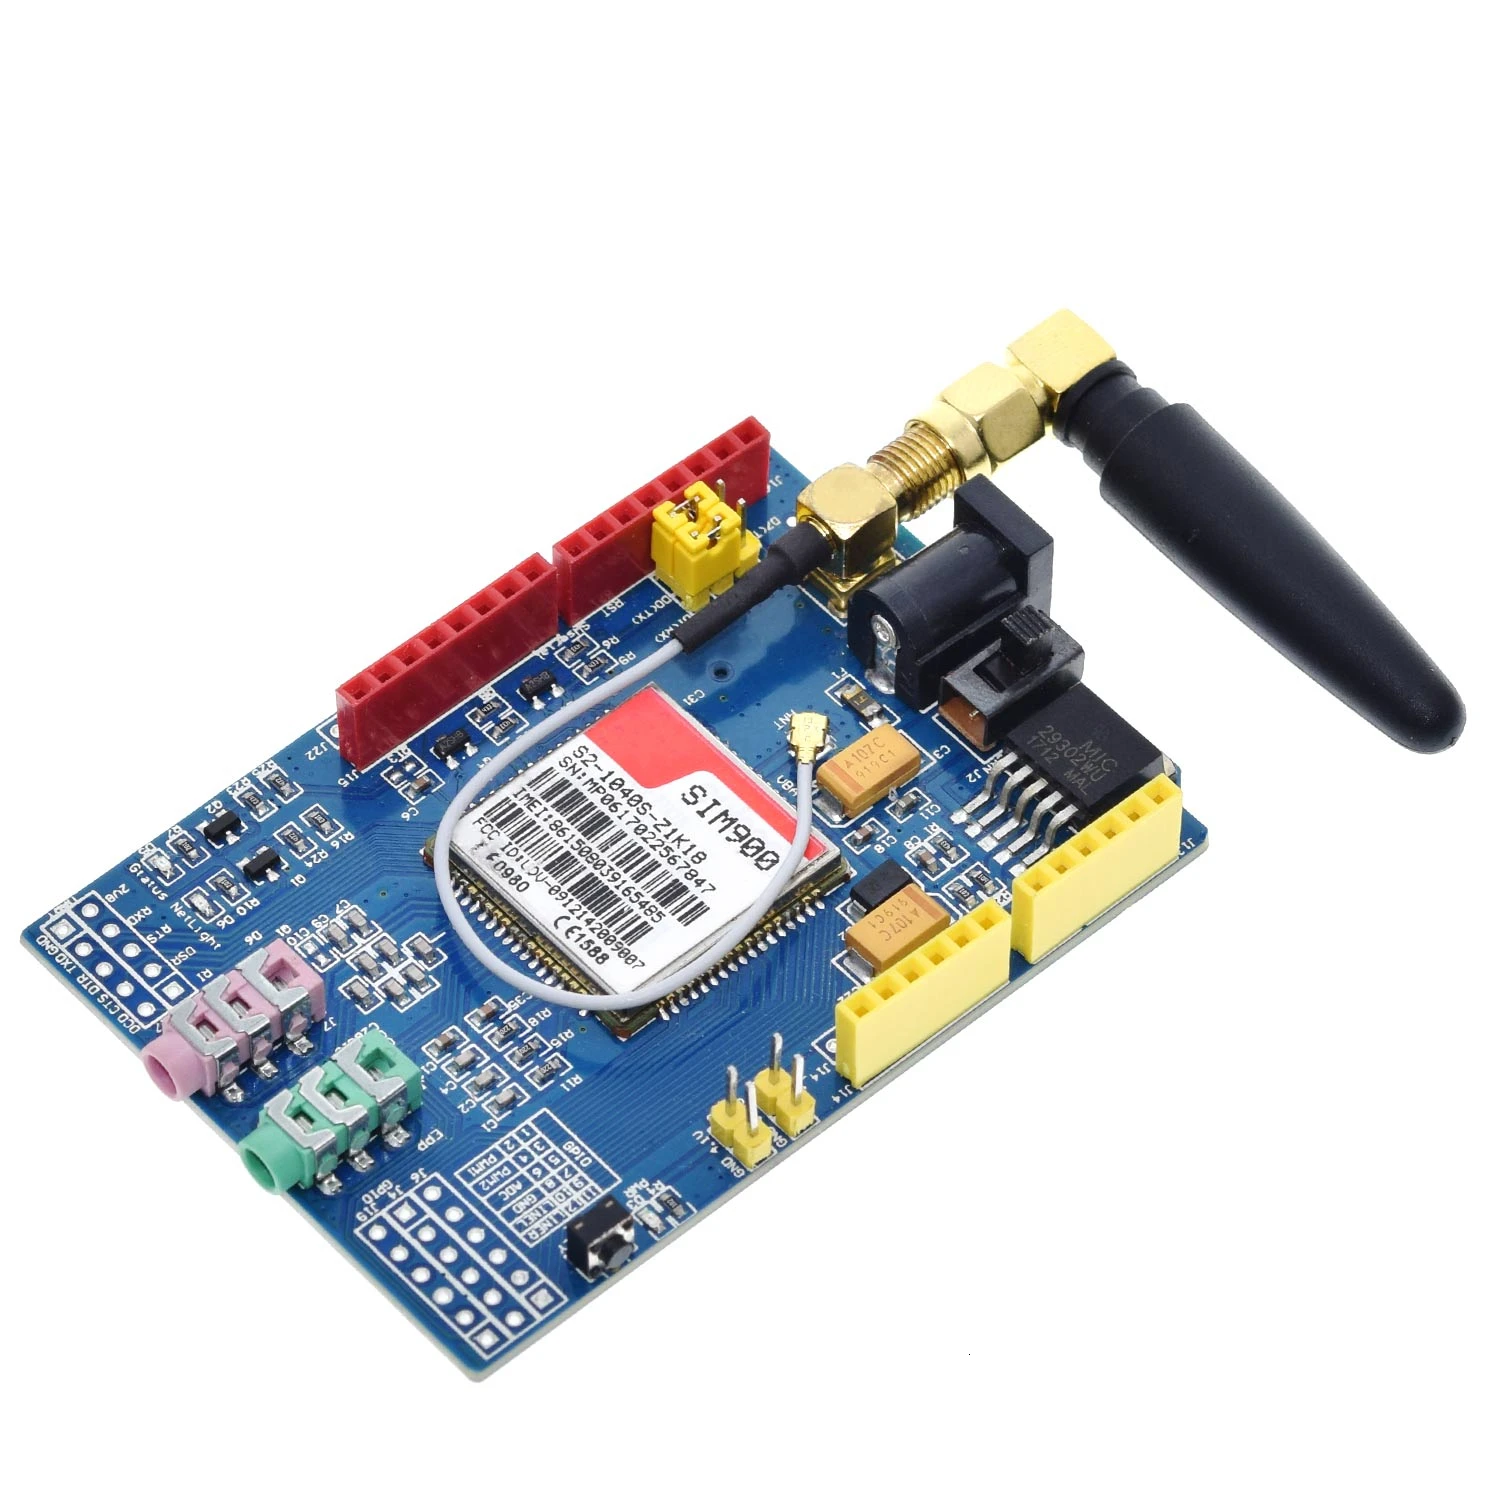 SIM900 850/900/1800/1900 MHz GPRS/GSM Development Board Module Kit For Arduino